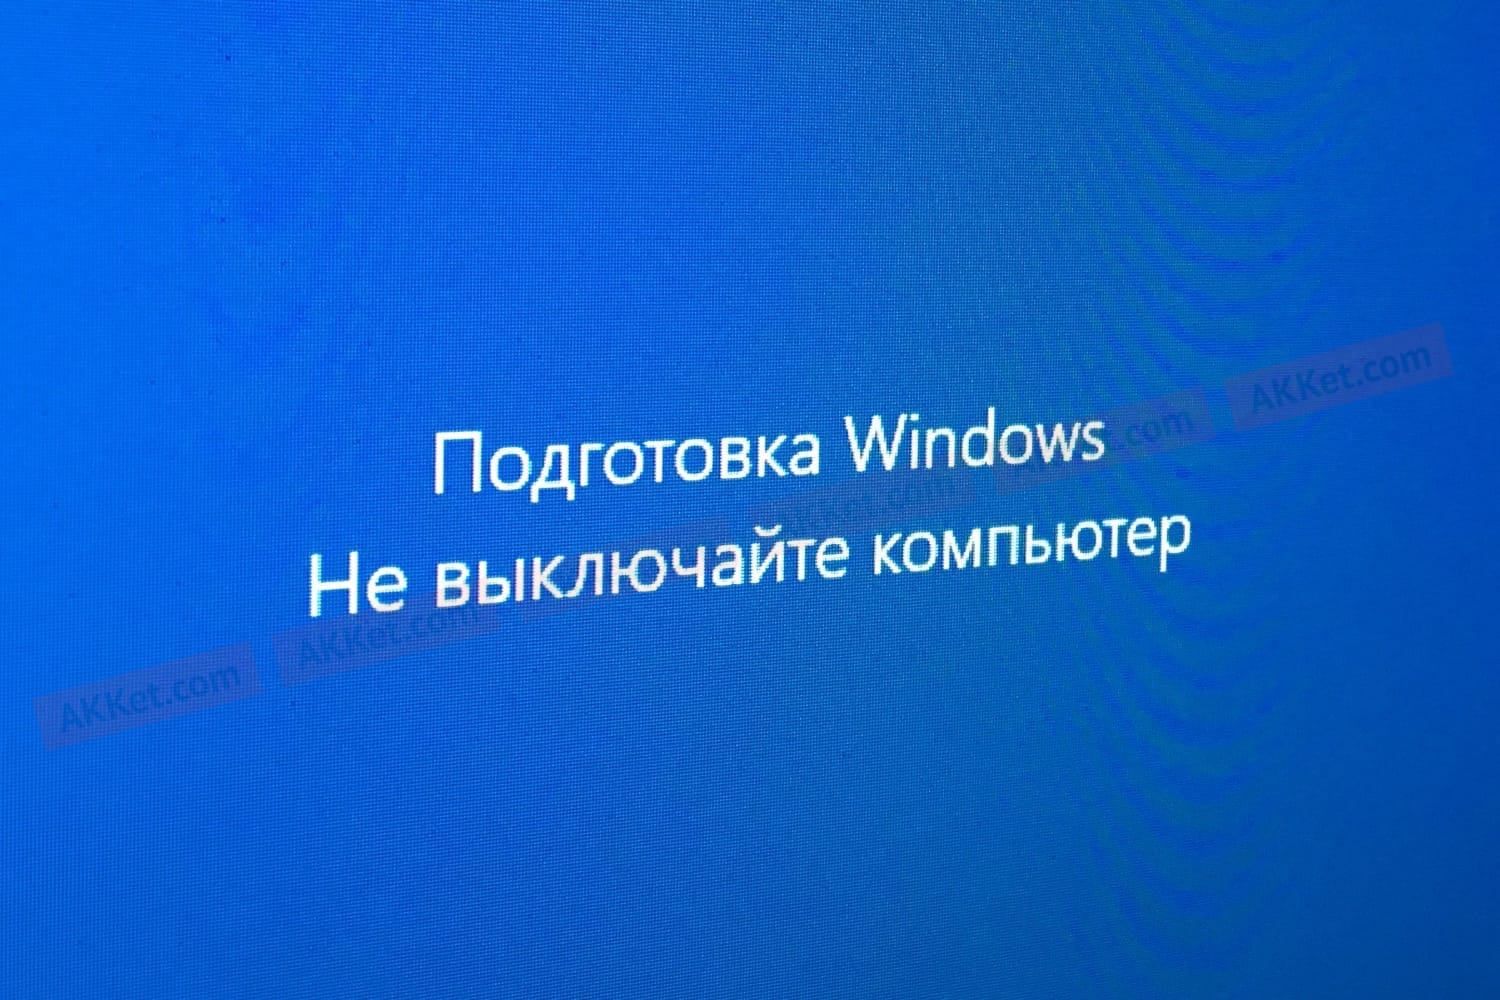 Microsoft Windows 10 rabstvo 133123